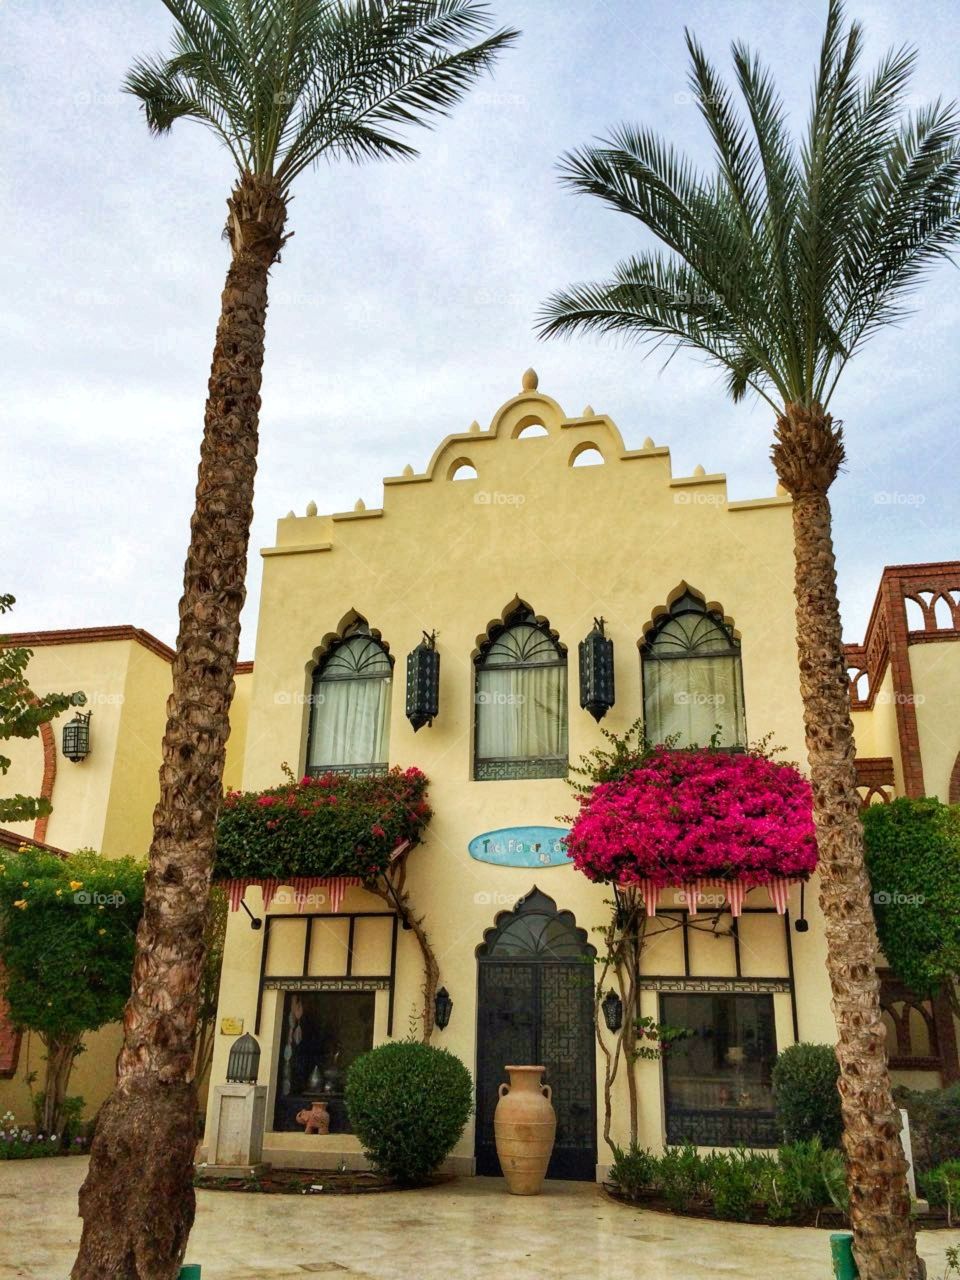 palm, Grand Hotel Sharm el Sheik, house